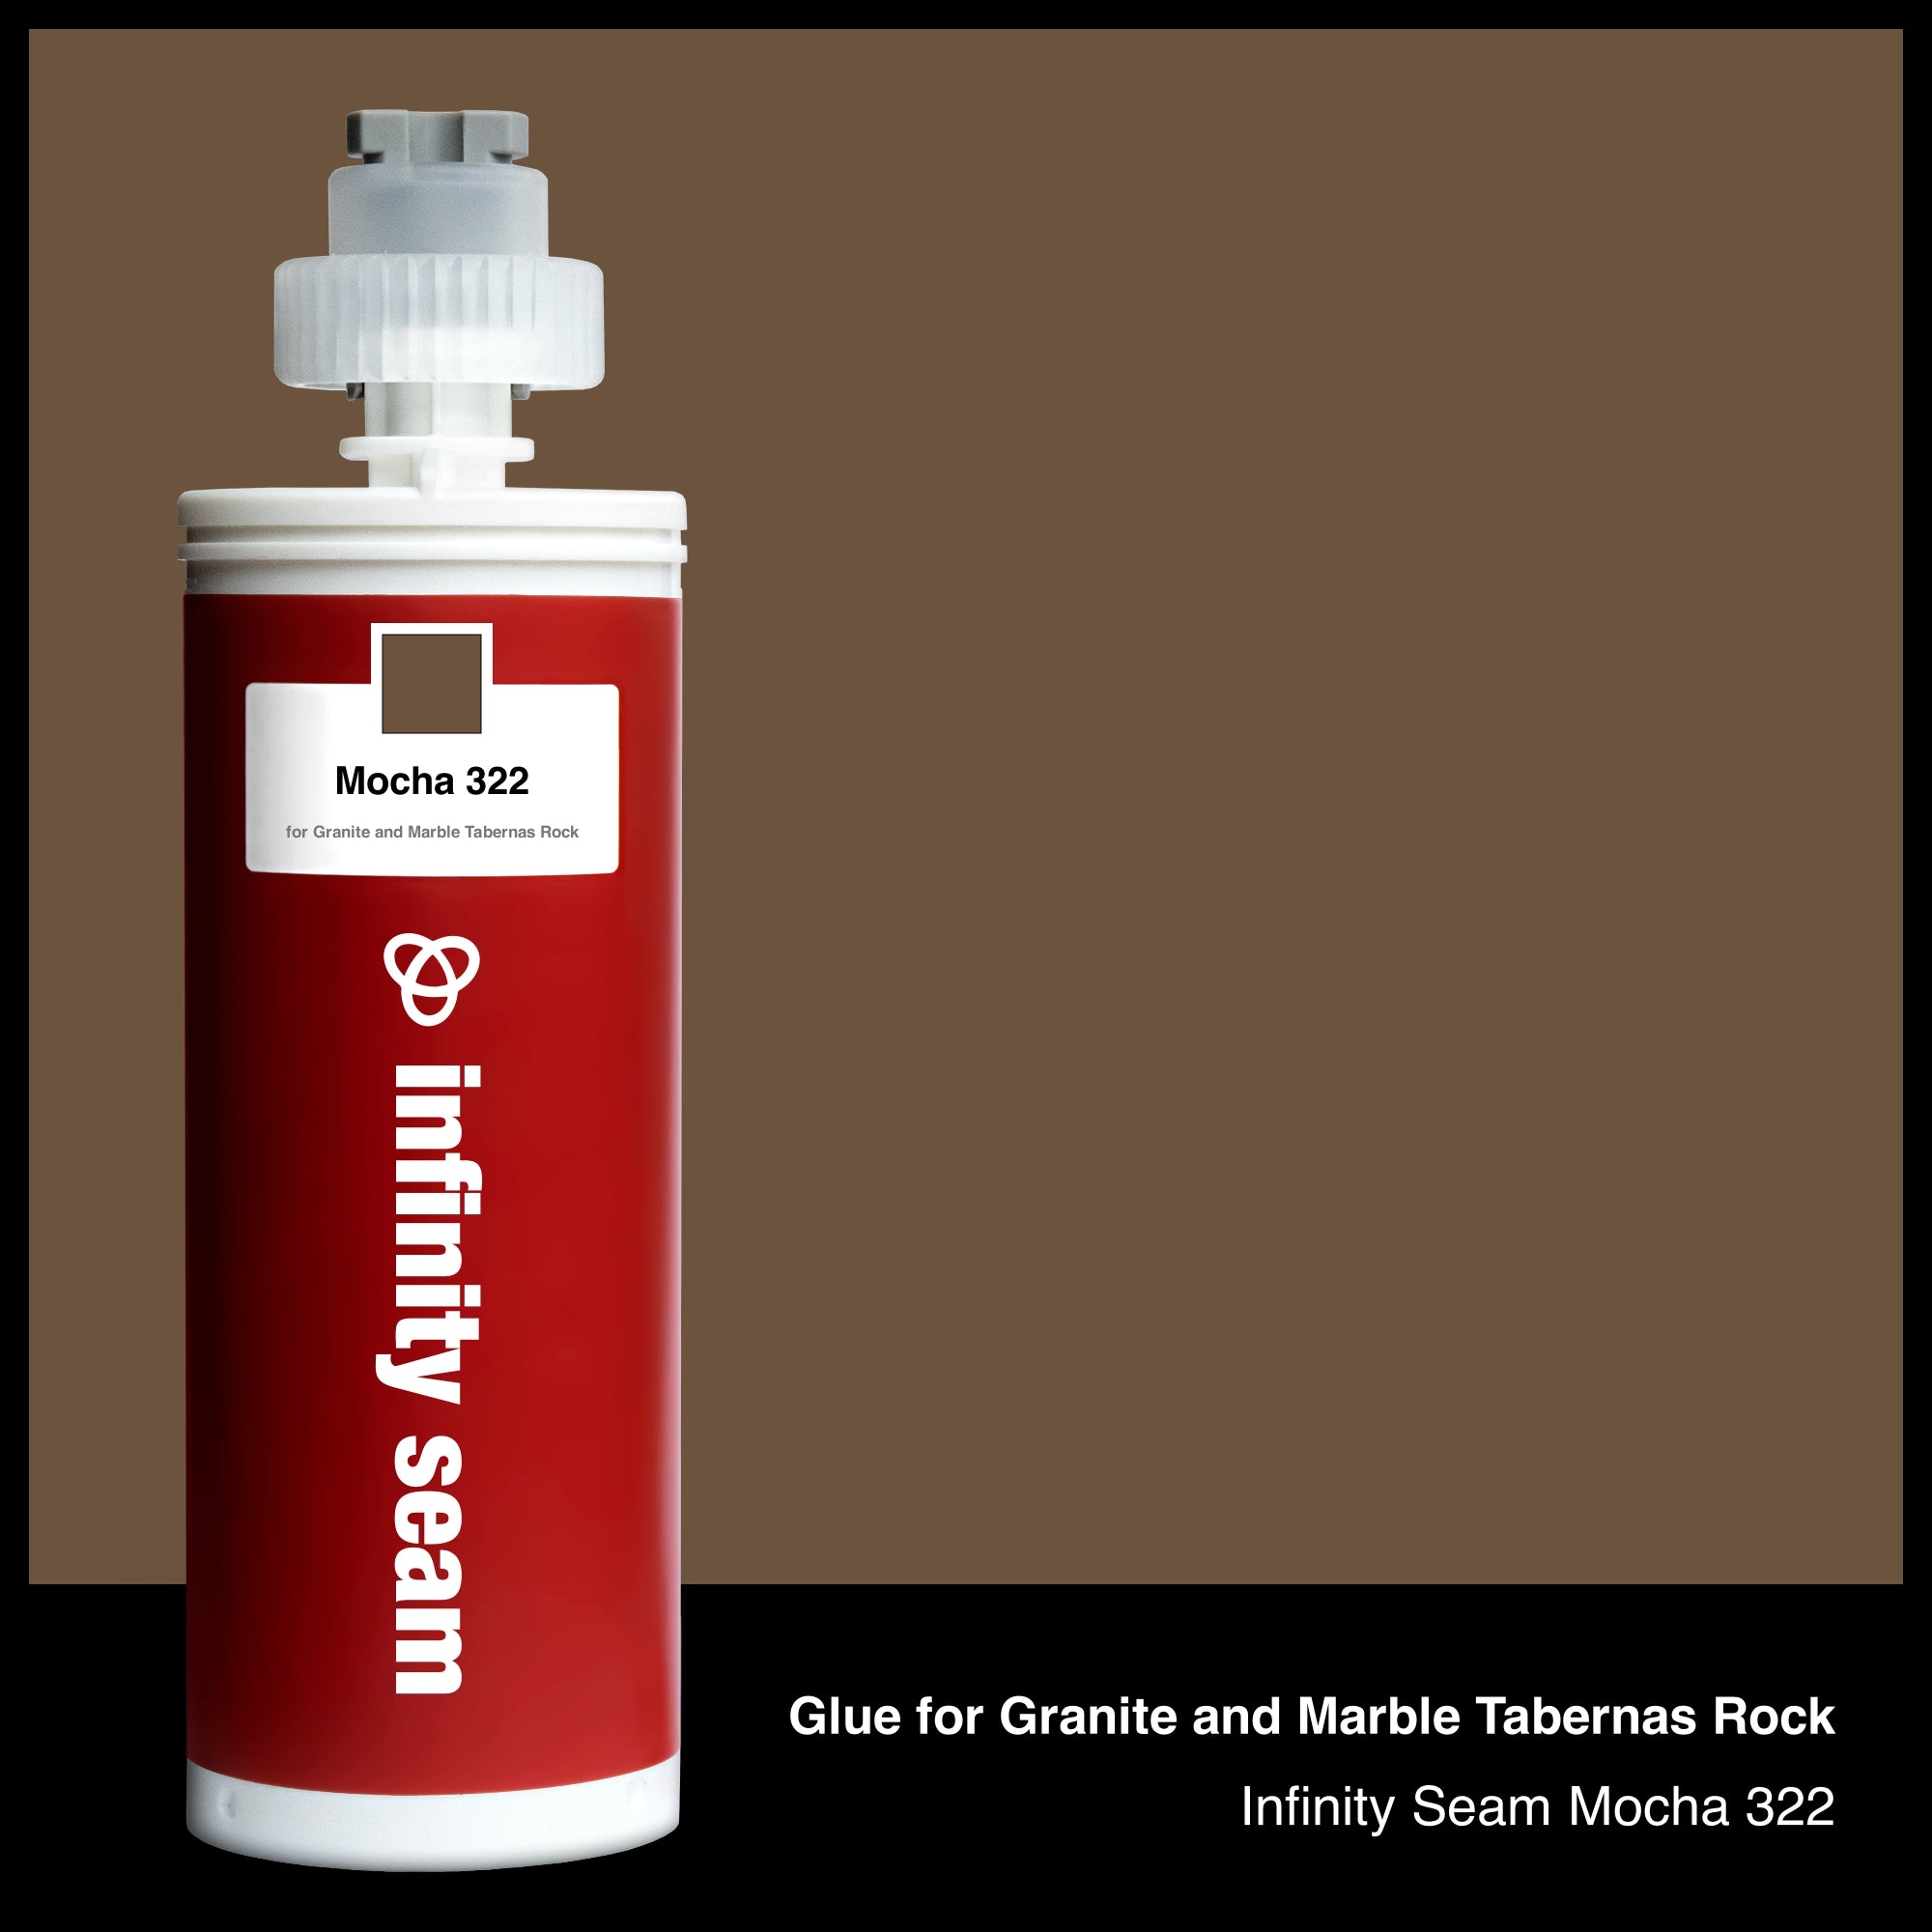 Glue for Granite and Marble Tabernas Rock: Infinity Seam Mocha 322